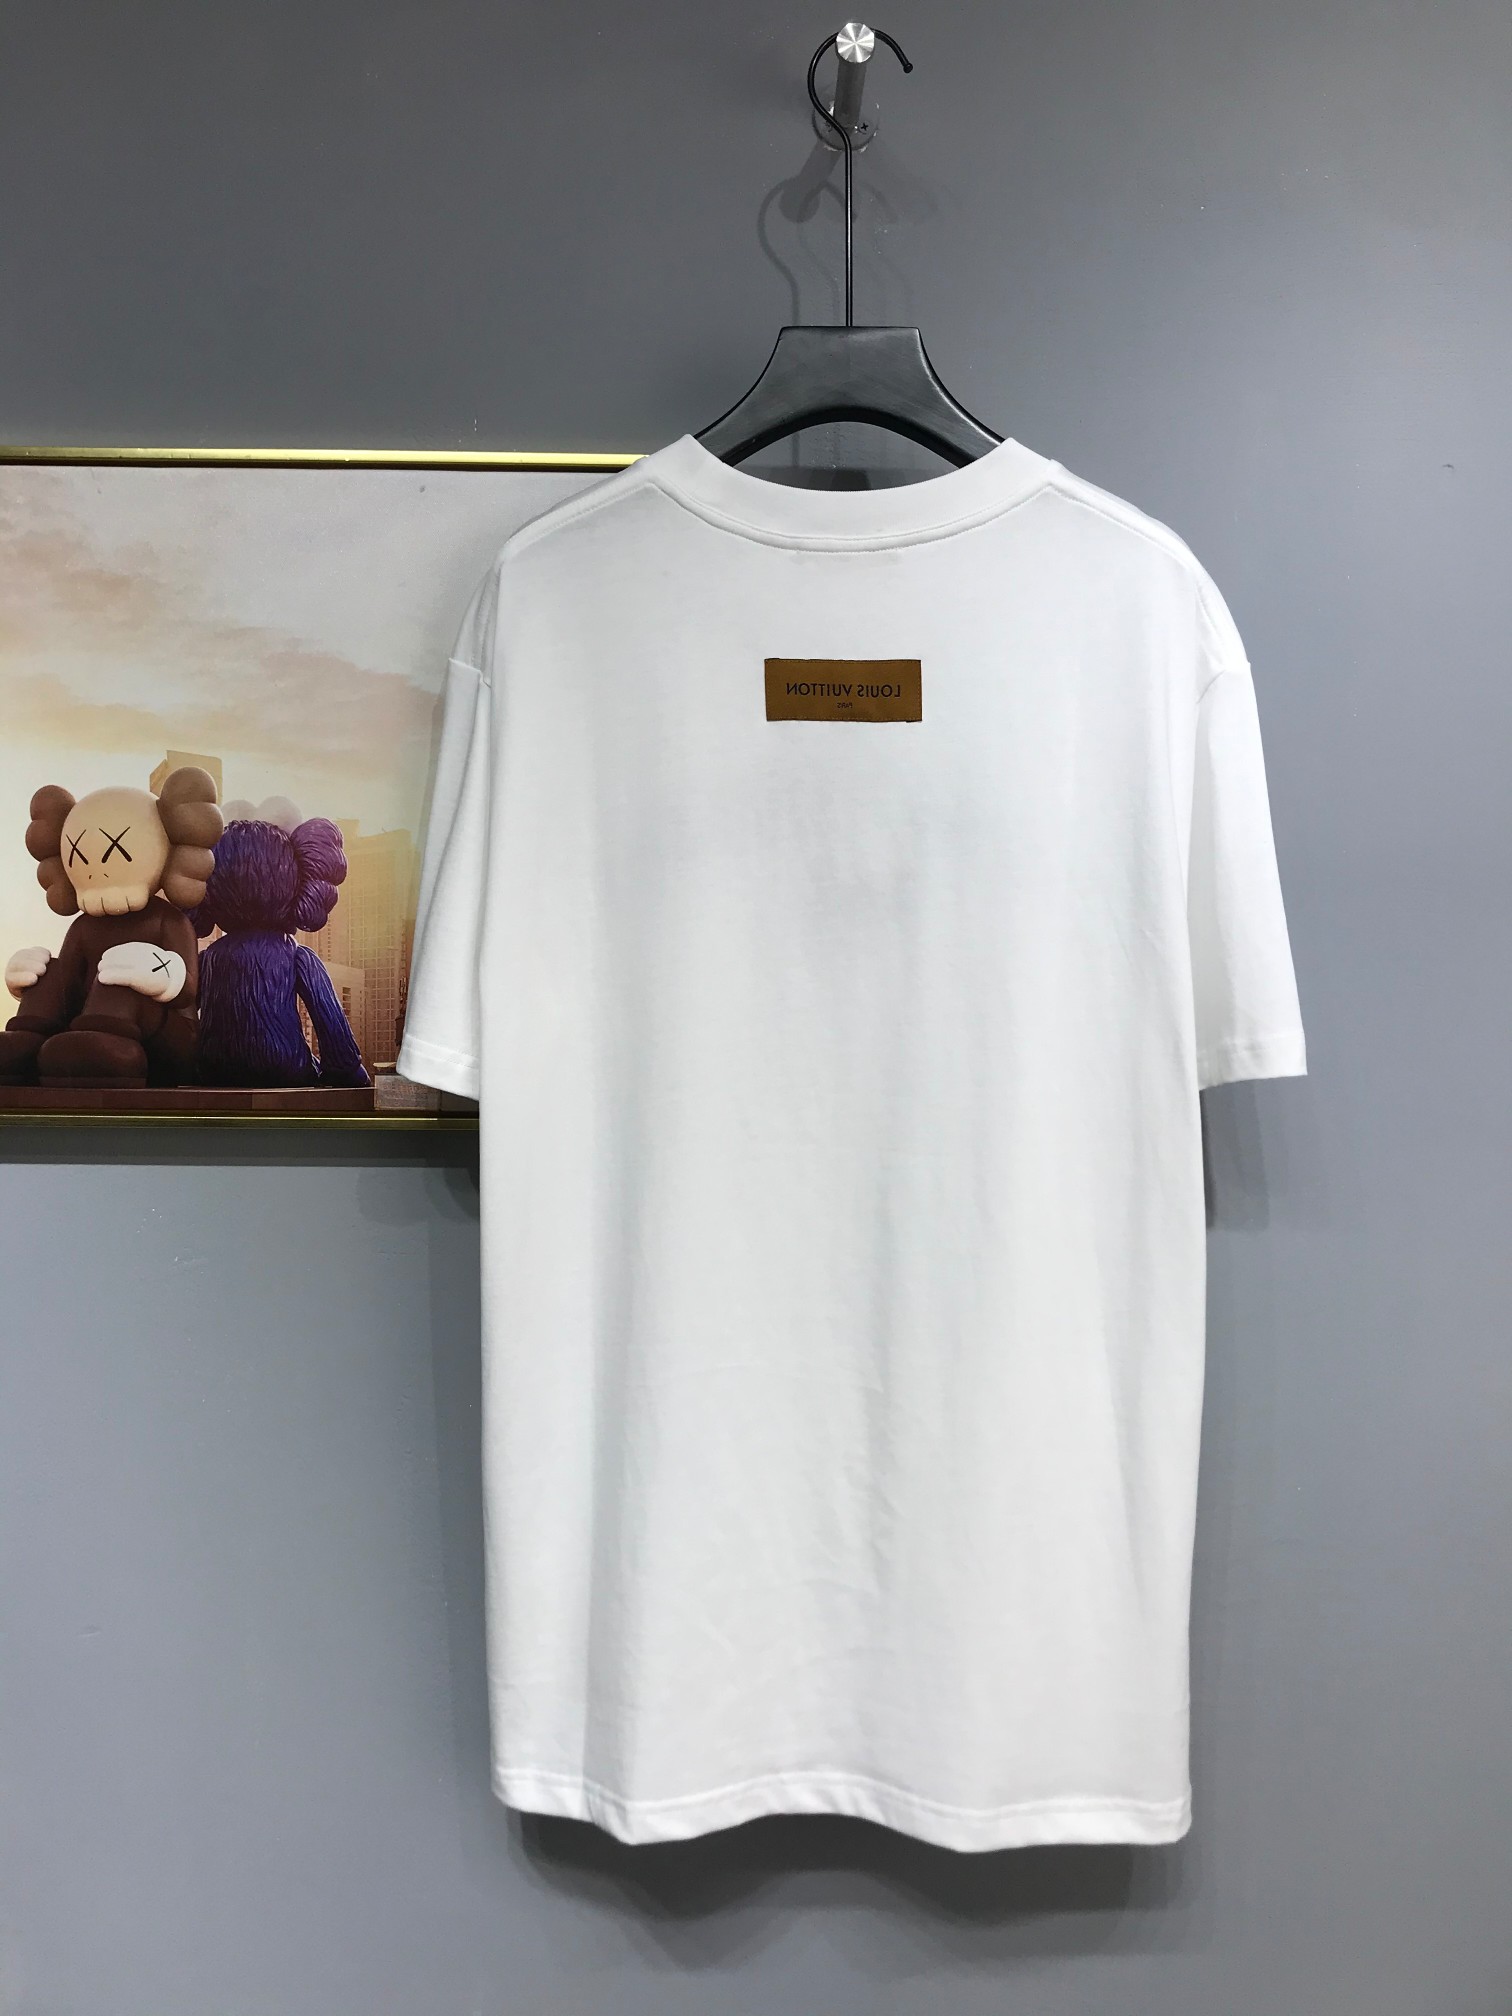 LV Cotton T-shirt